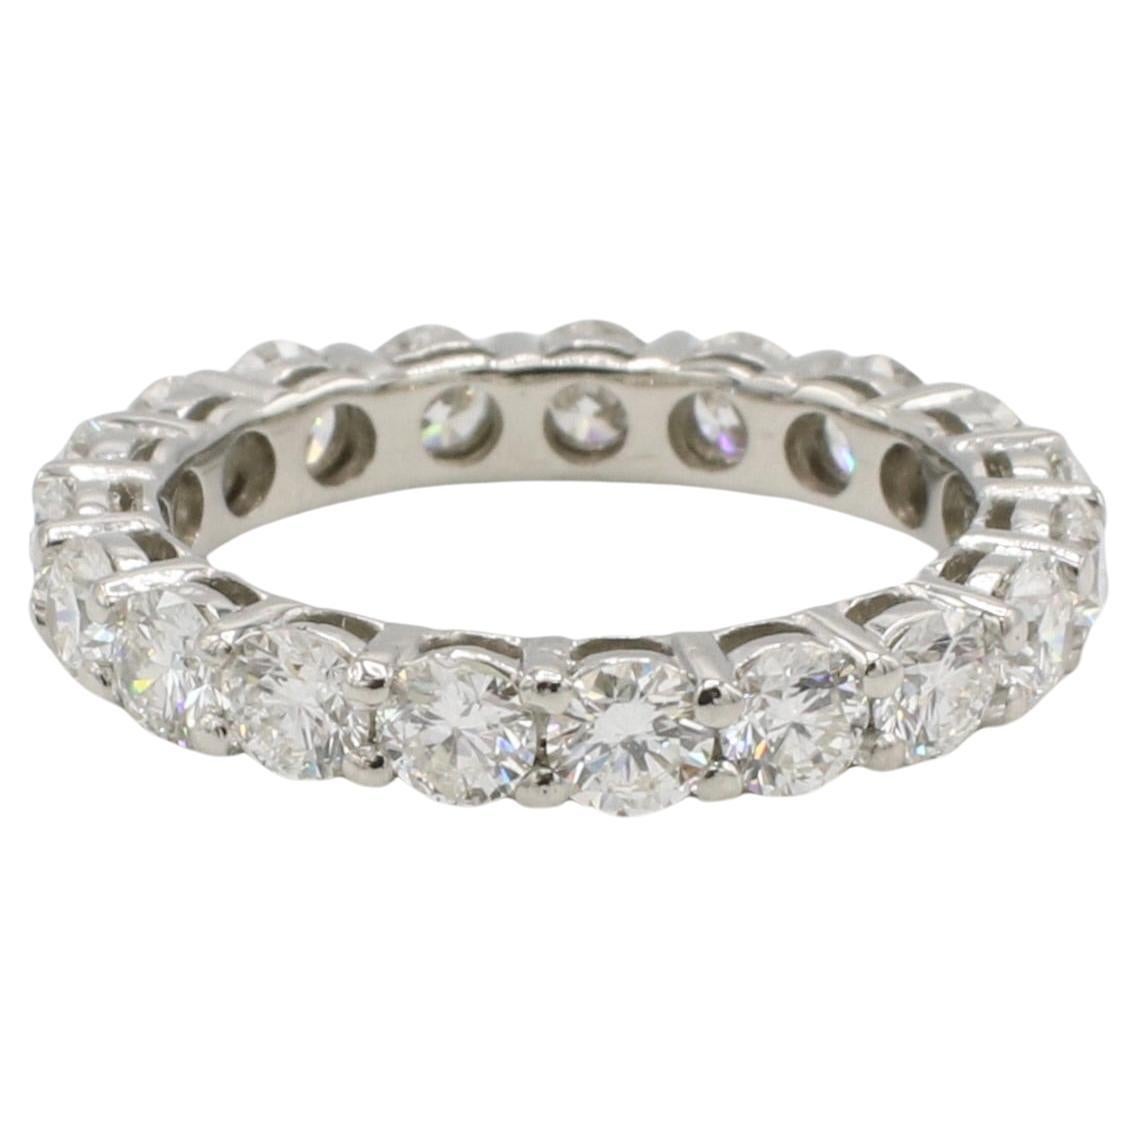 Platinum Natural 2.00 Carat Diamond Eternity Band Wedding Ring 
Metal: Platinum
Weight: 3.65 grams
Diamonds: Approx. 2.00 CTW round G-H VS natural diamonds
Size: 4.25 (US)
Width: 3mm
